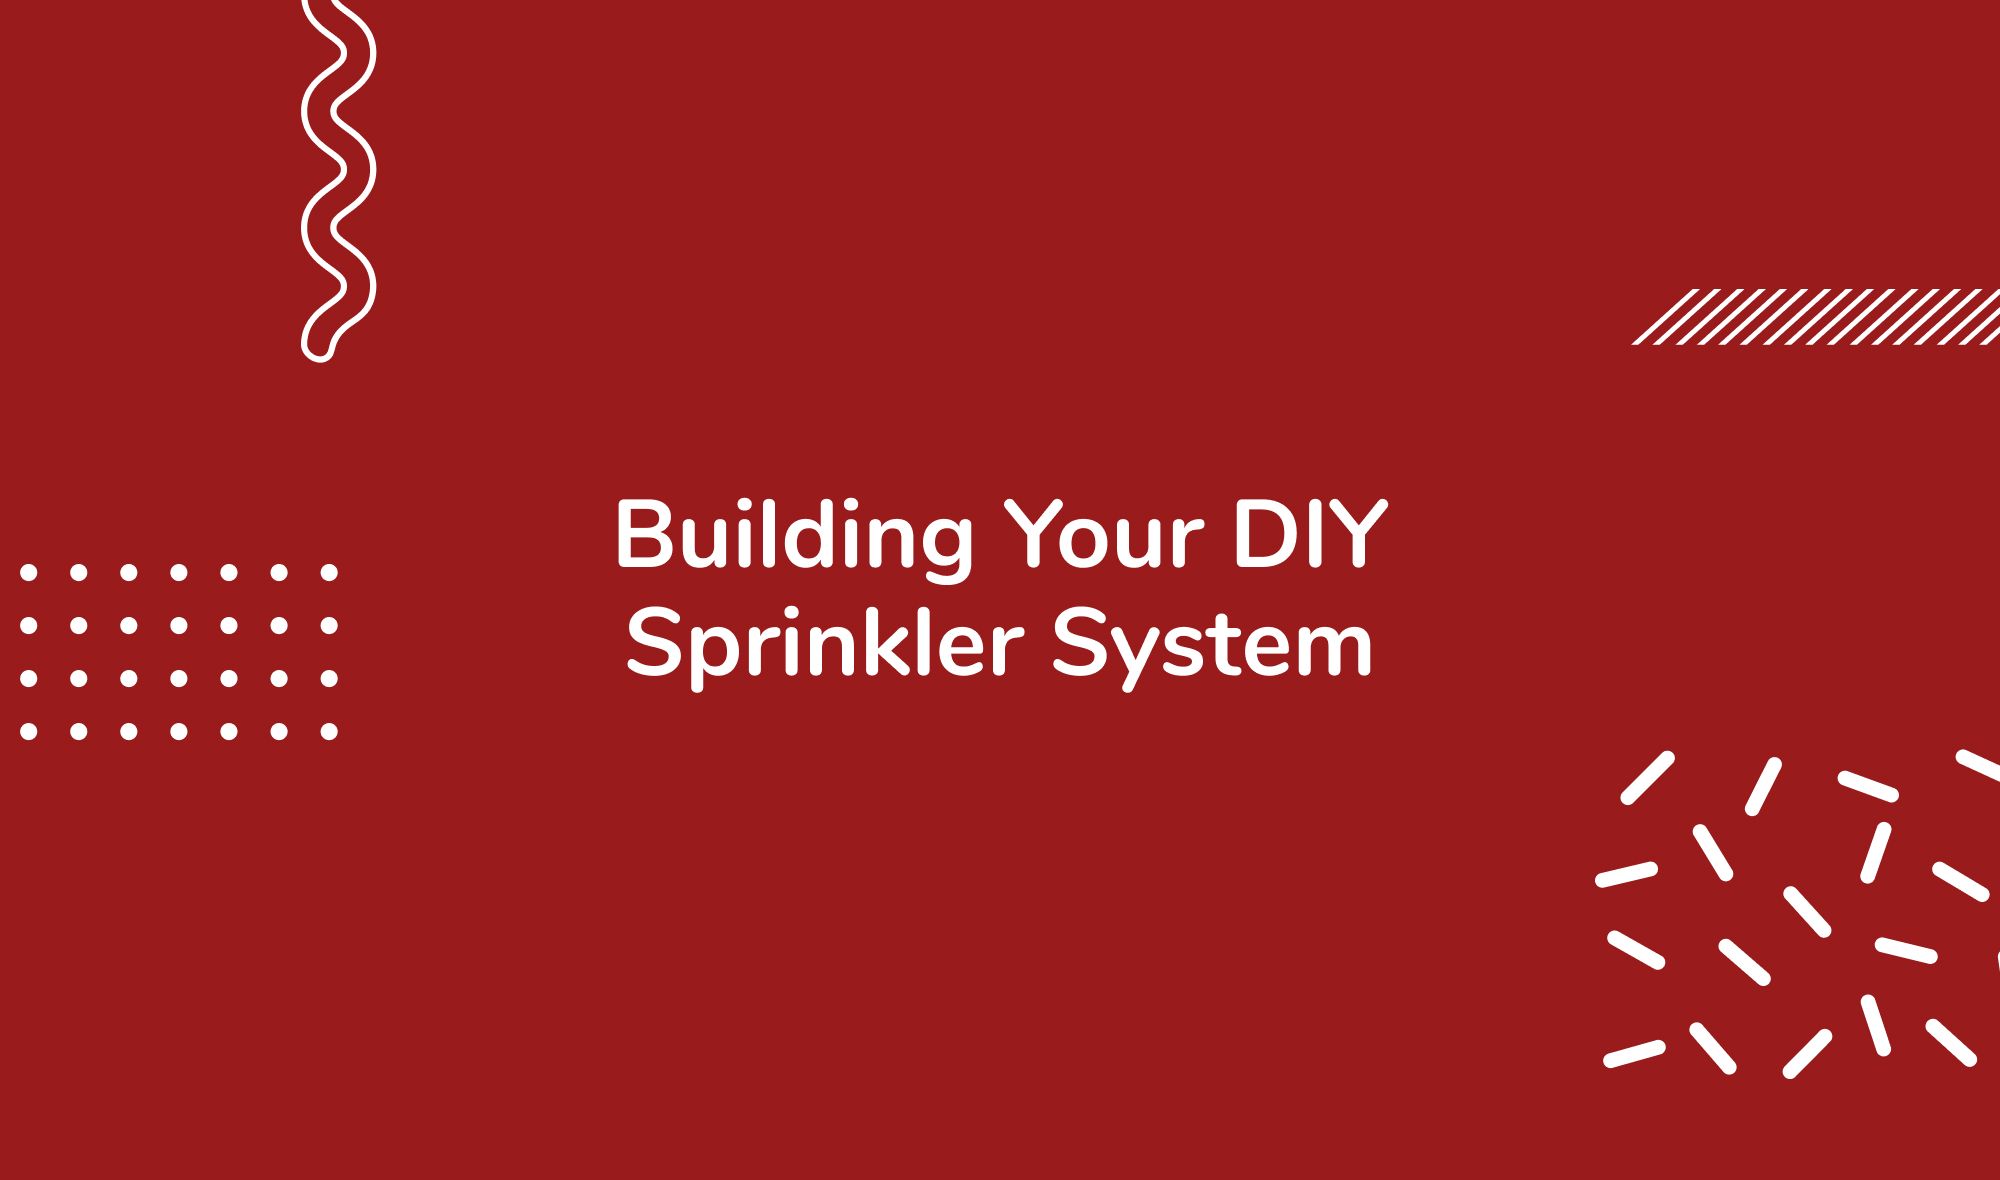 Building Your DIY Sprinkler System: A Step-By-Step Guide